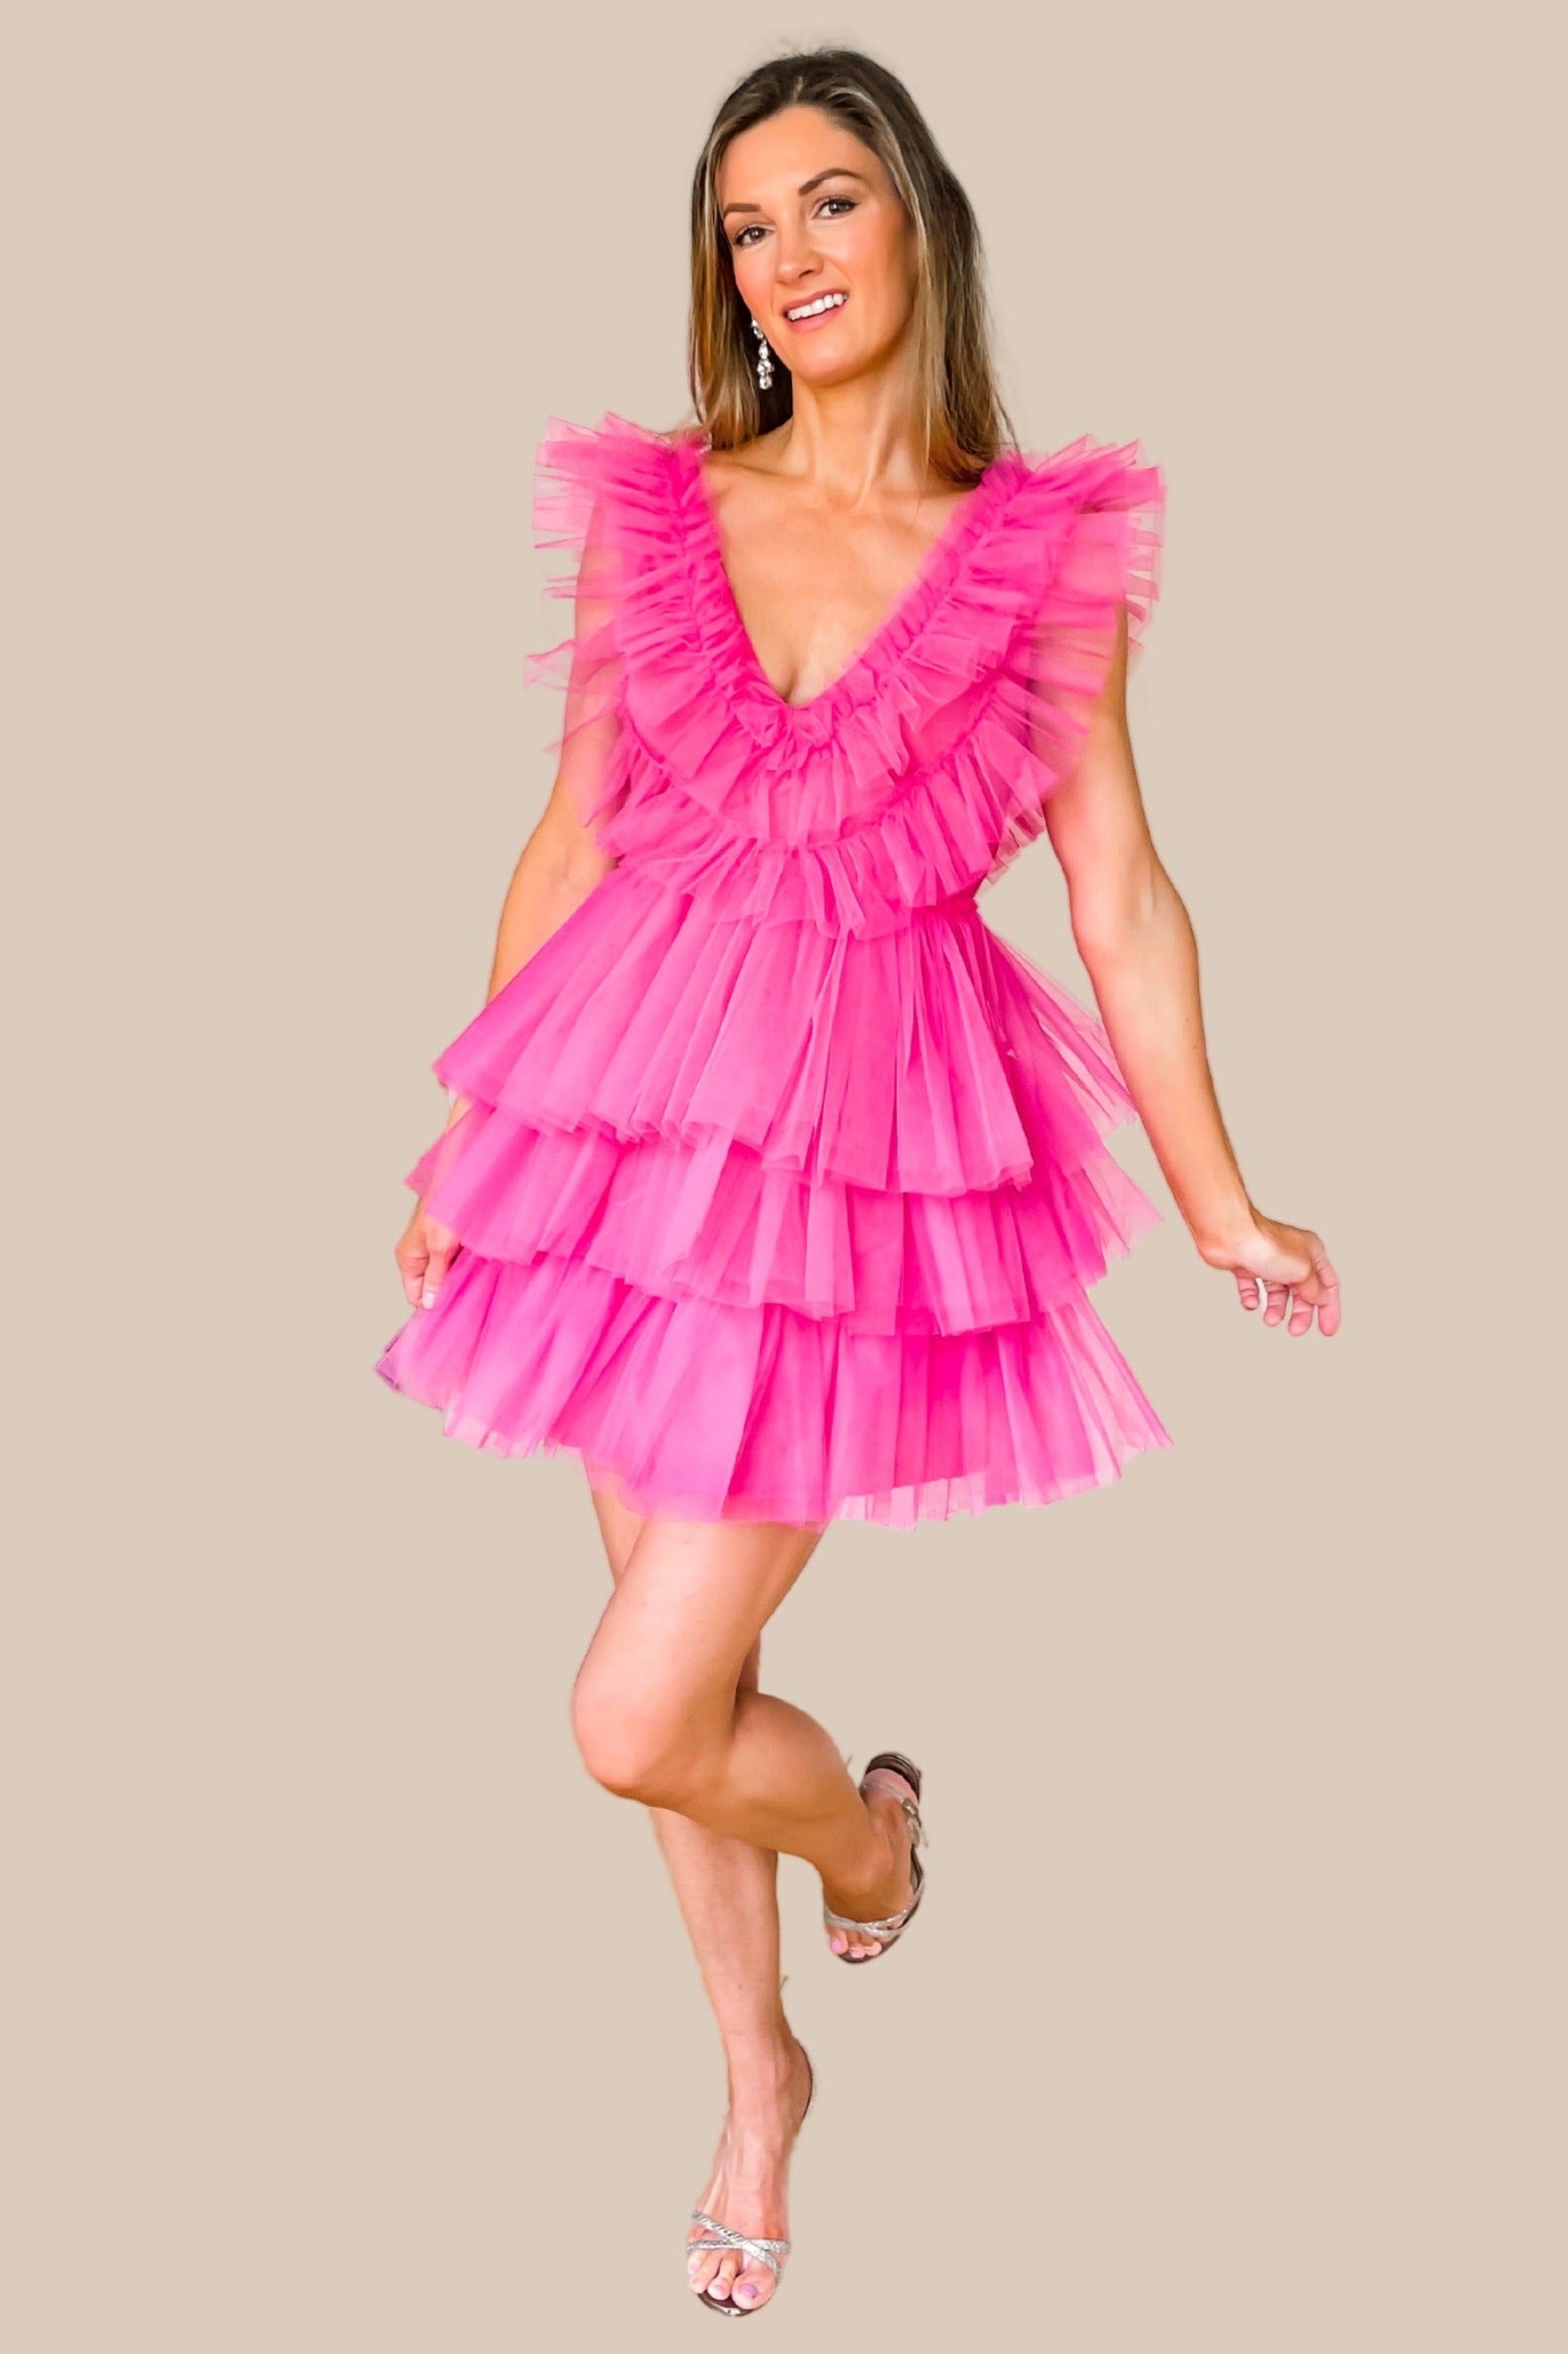 hot pink cocktail dress